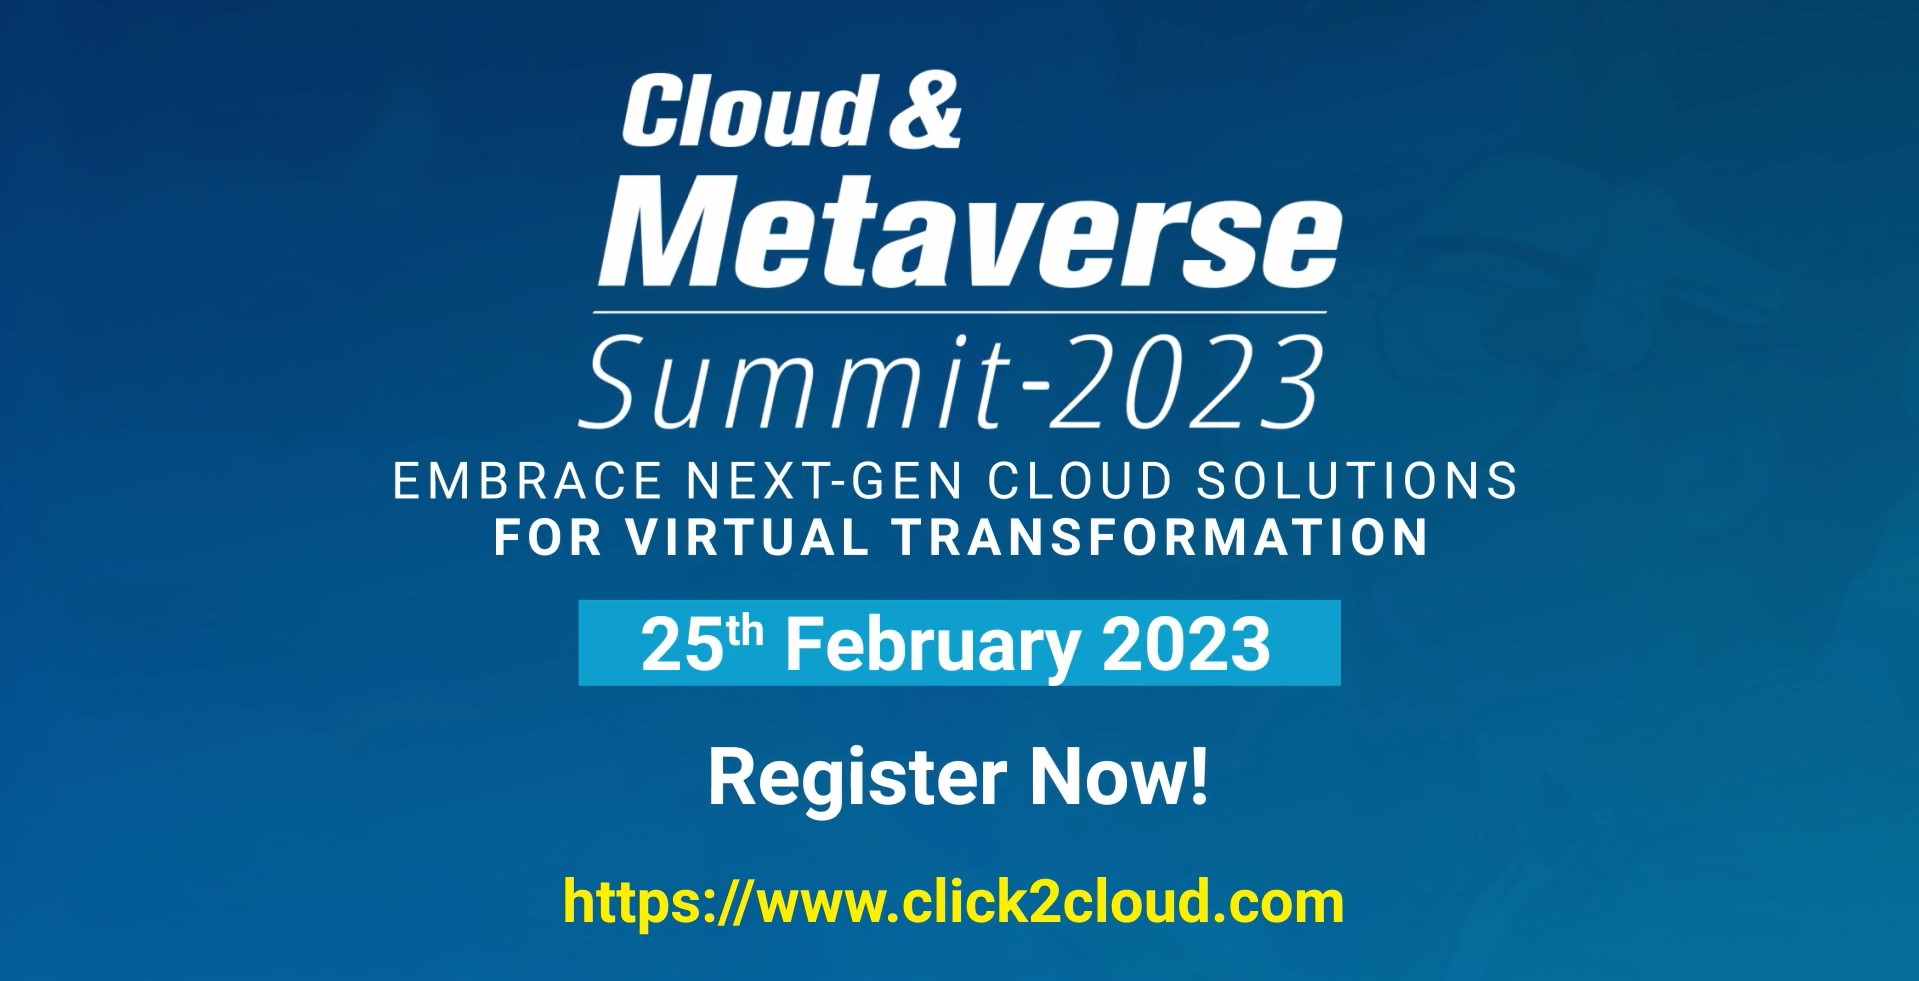 Cloud & Metaverse Summit 2023 - Largest Global Cloud Summit - February 25, 2023-Click2Cloud